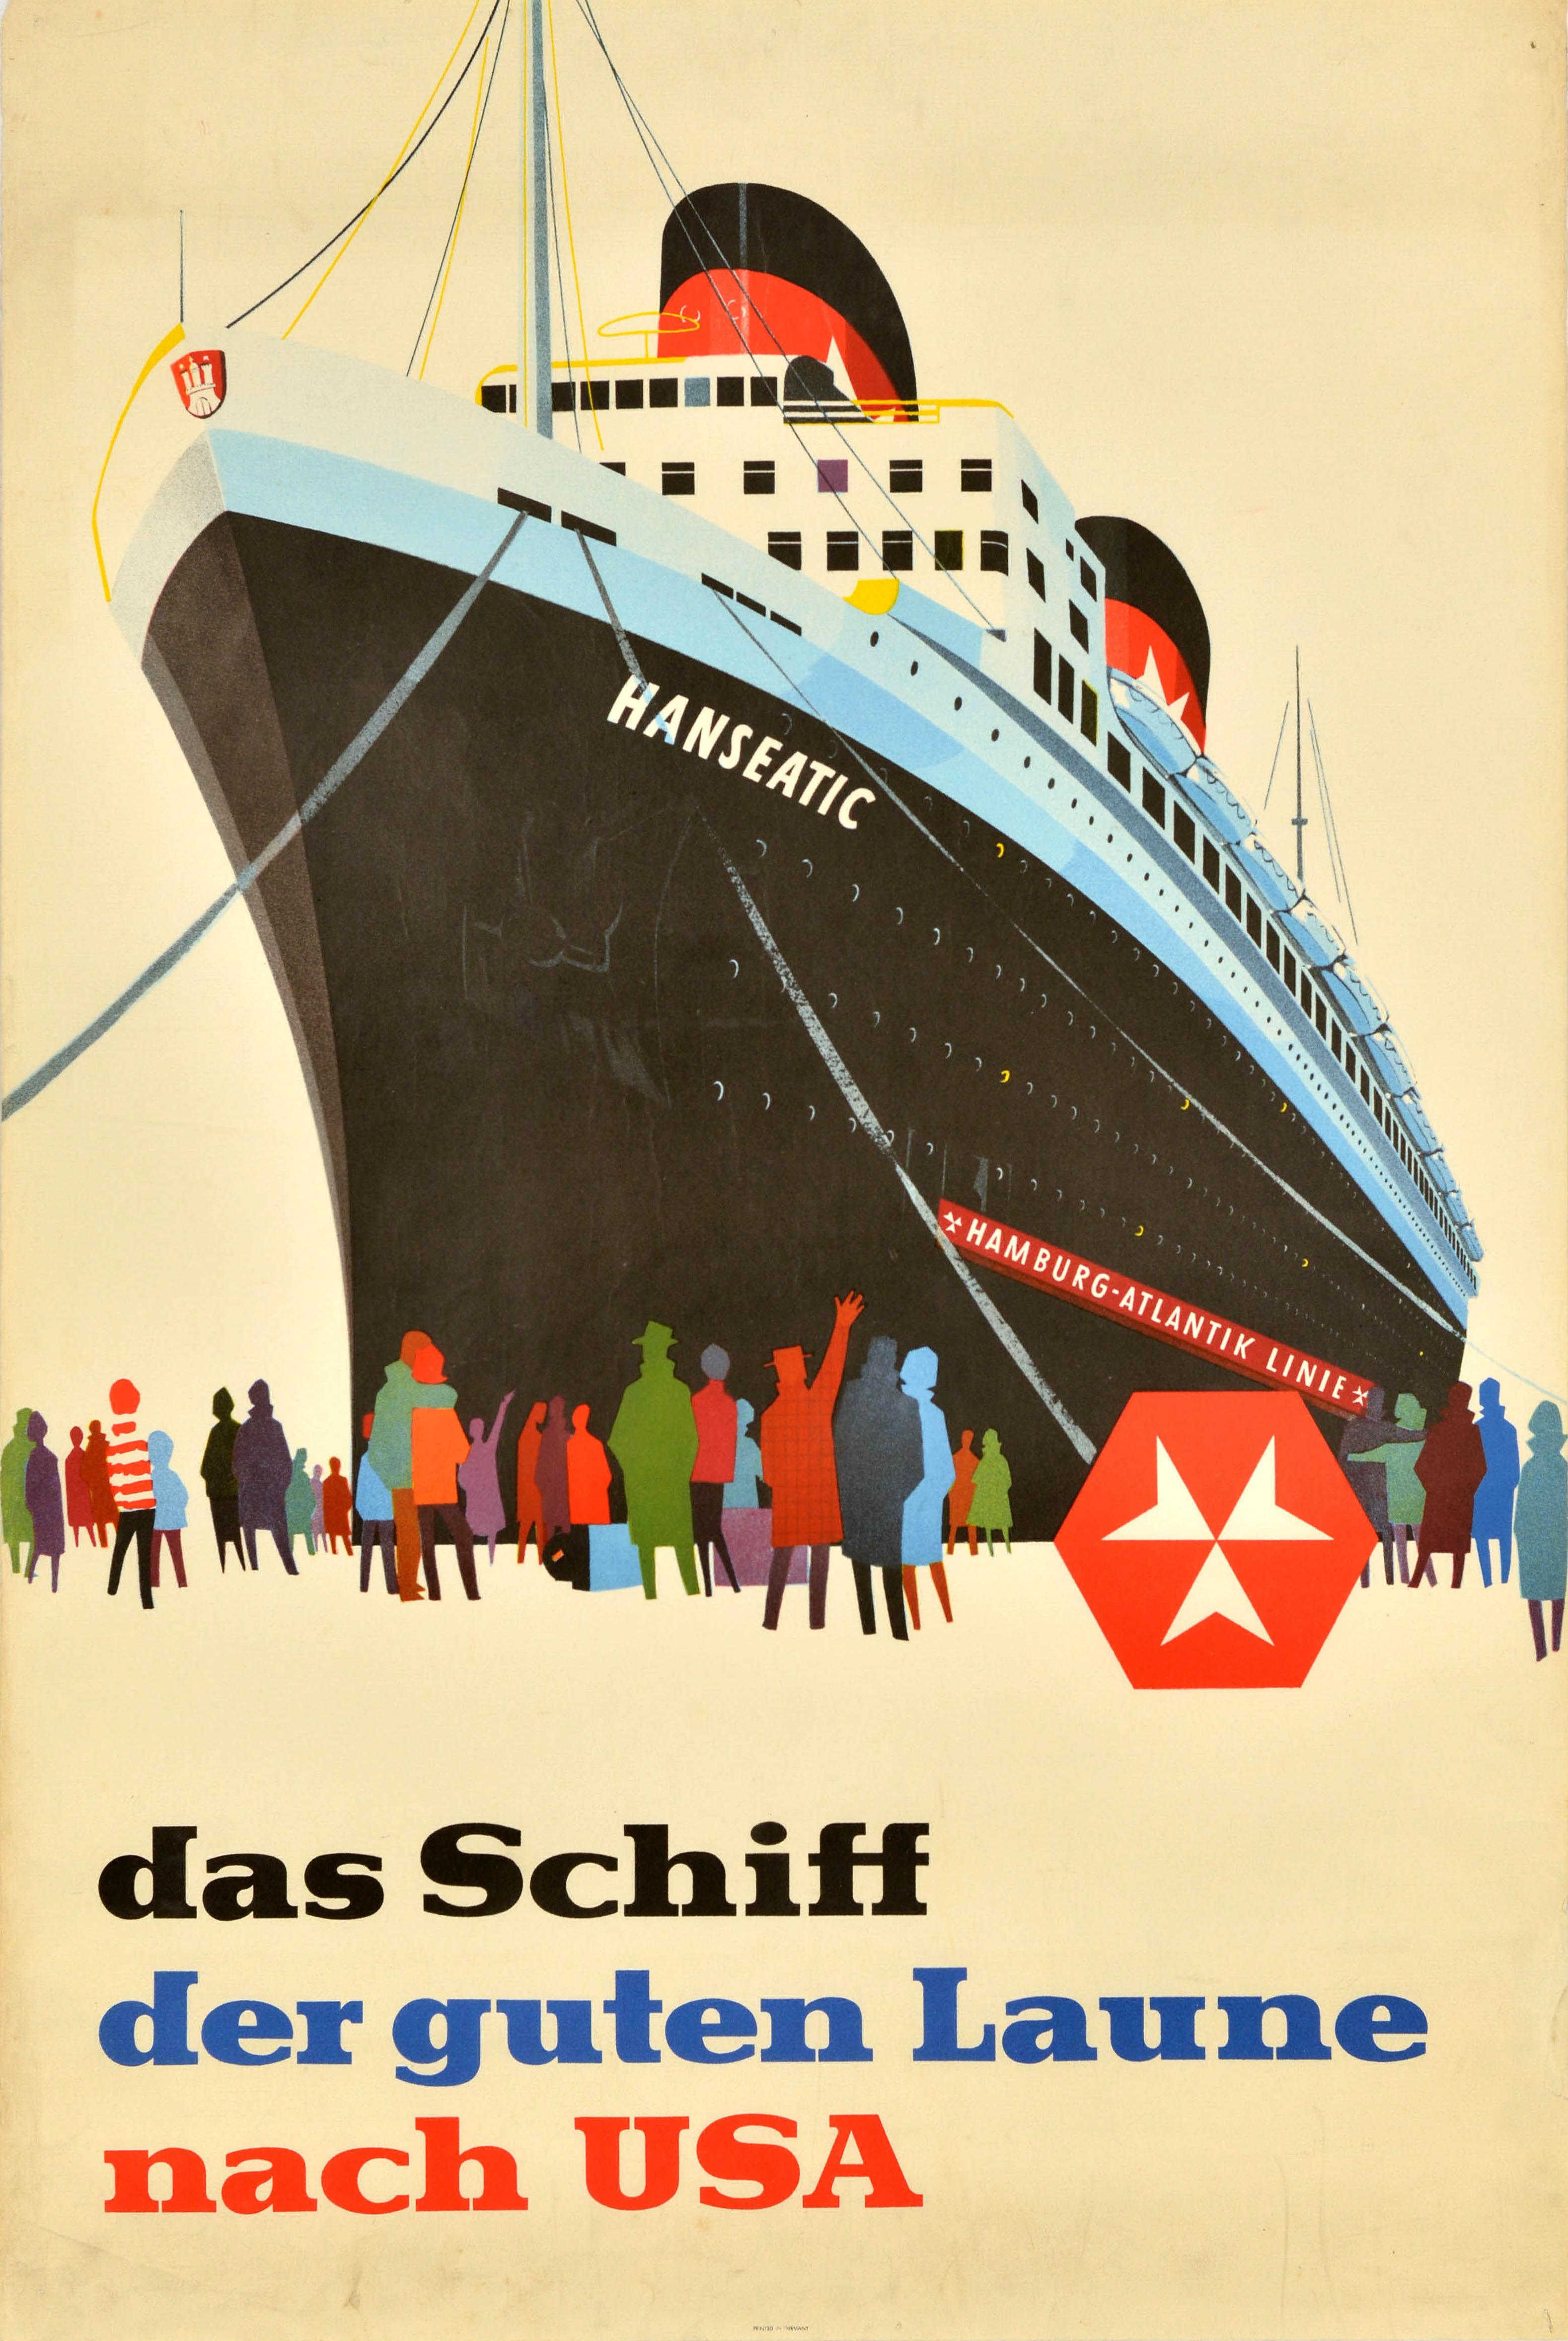 Unknown Print – Original-Vintage-Reiseplakat Hamburg Atlantic Line, Hanseatic USA, Kreuzfahrtschiff